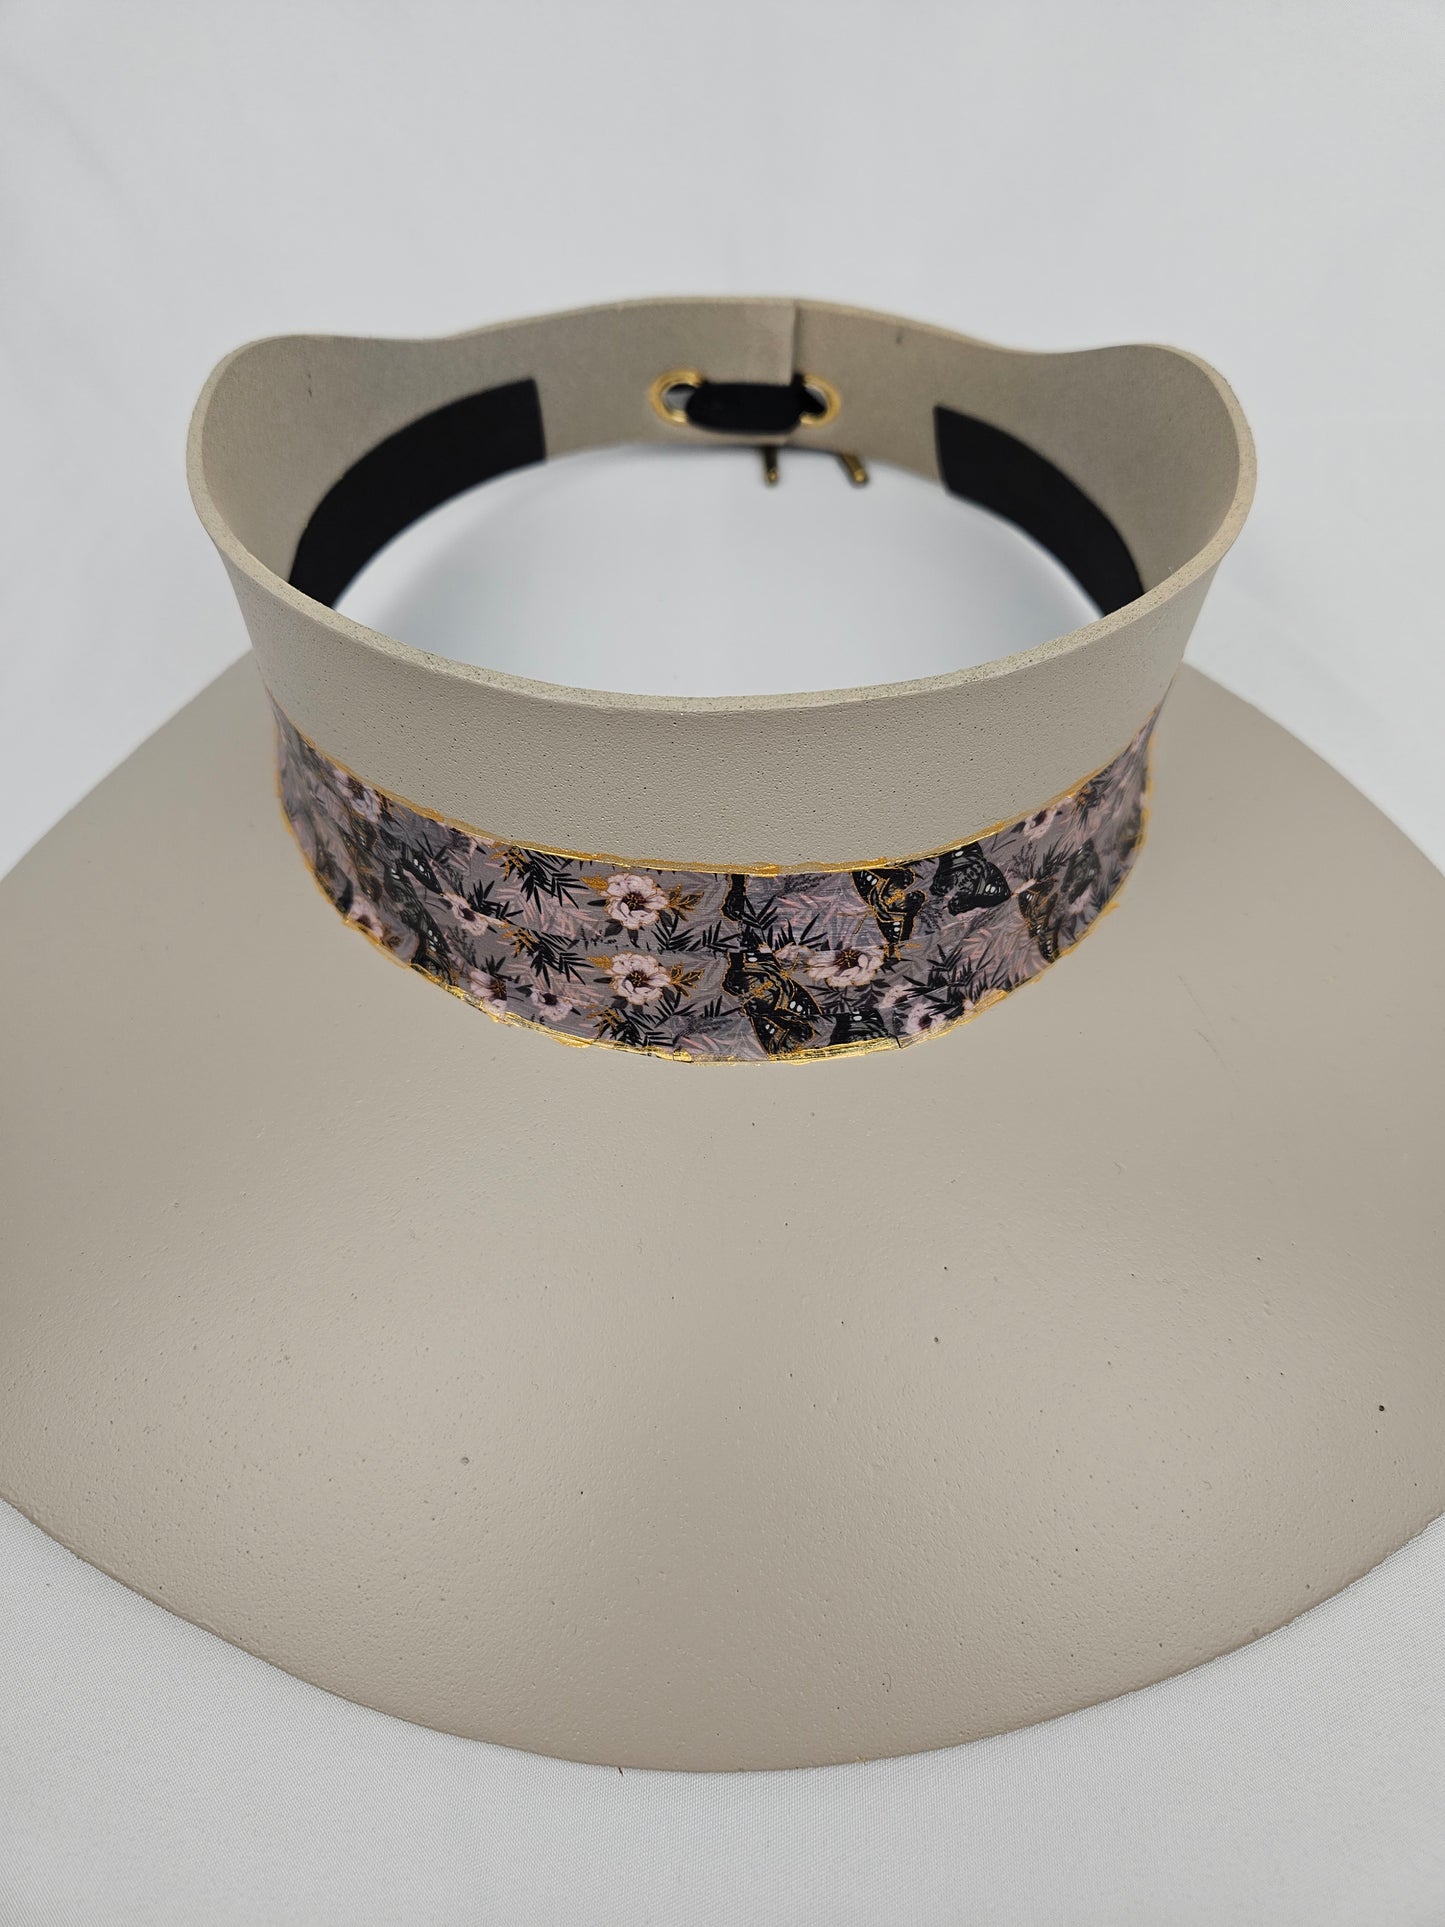 Truly Taupe Audrey Foam Sun Visor Hat with Elegant Light Pink and Lavender Floral Band: Walks, Brunch, Swim, Garden, Golf, Easter, Church, No Headache